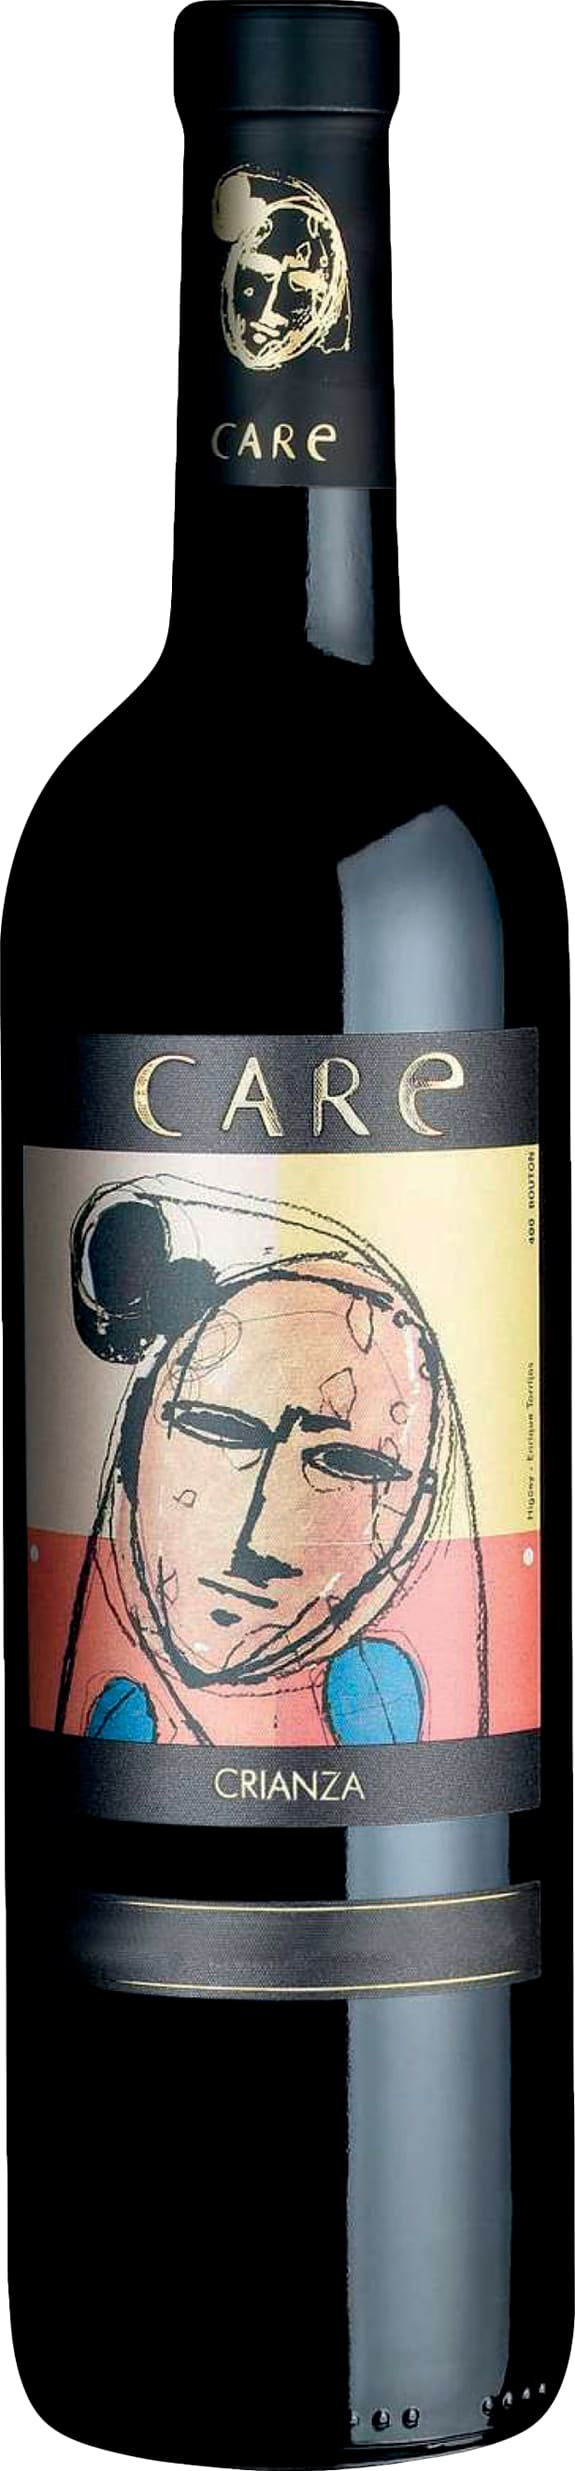 Care Crianza 2020 6x75cl - Just Wines 